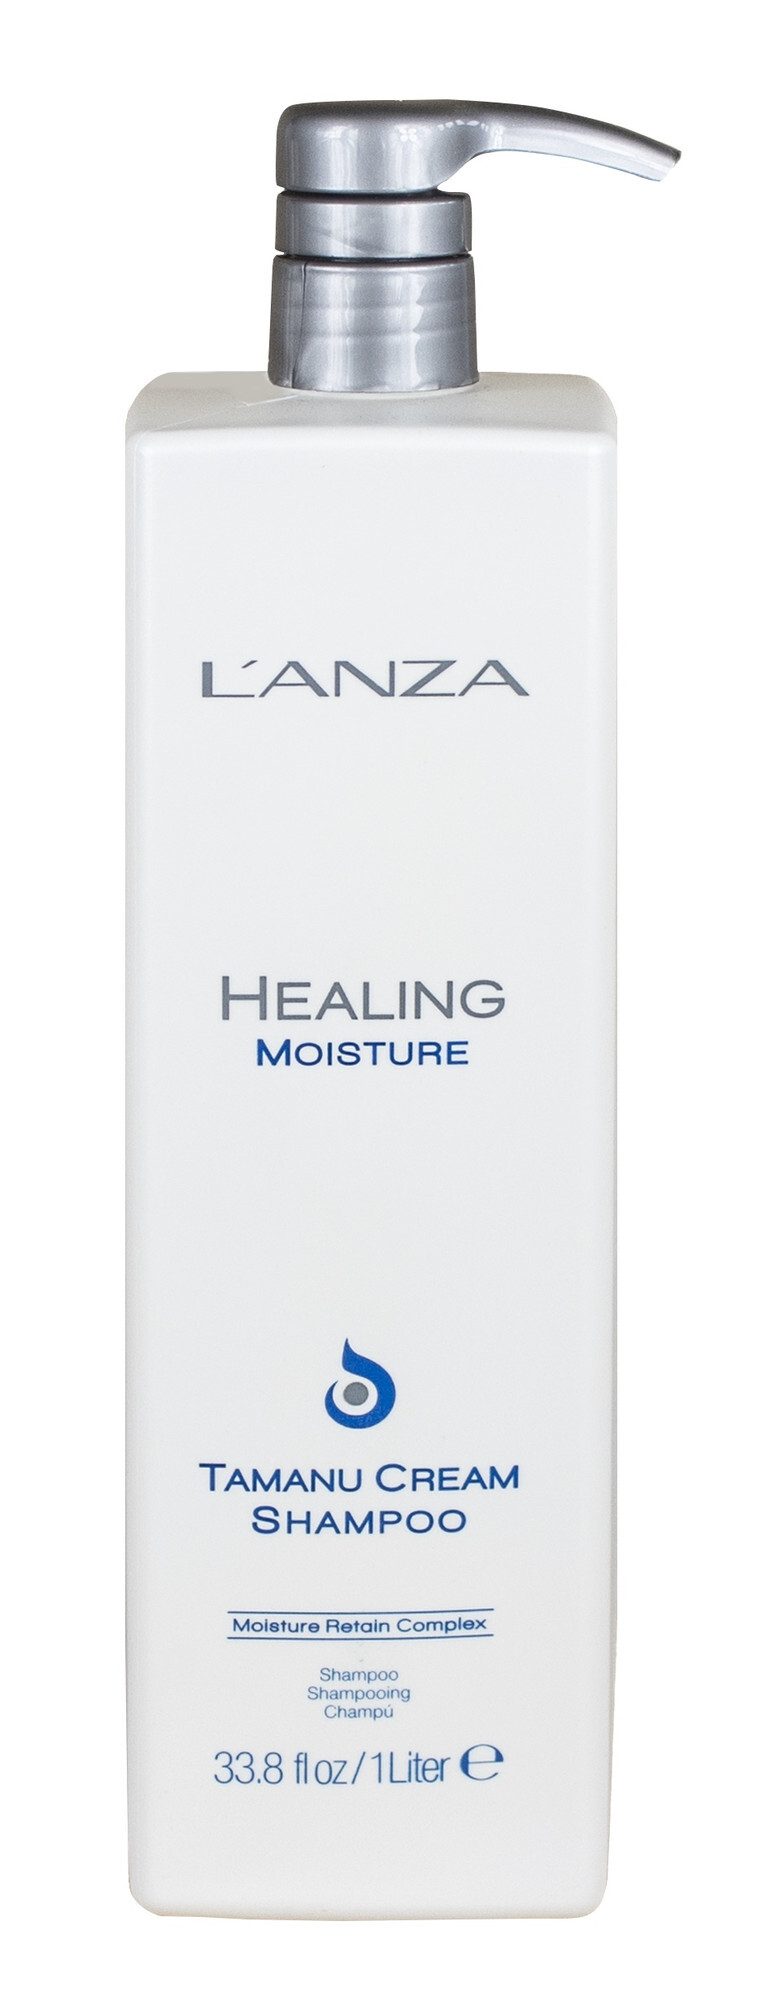 Lanza Healing Moisture Tamanu Cream 1000 ml Shampoo